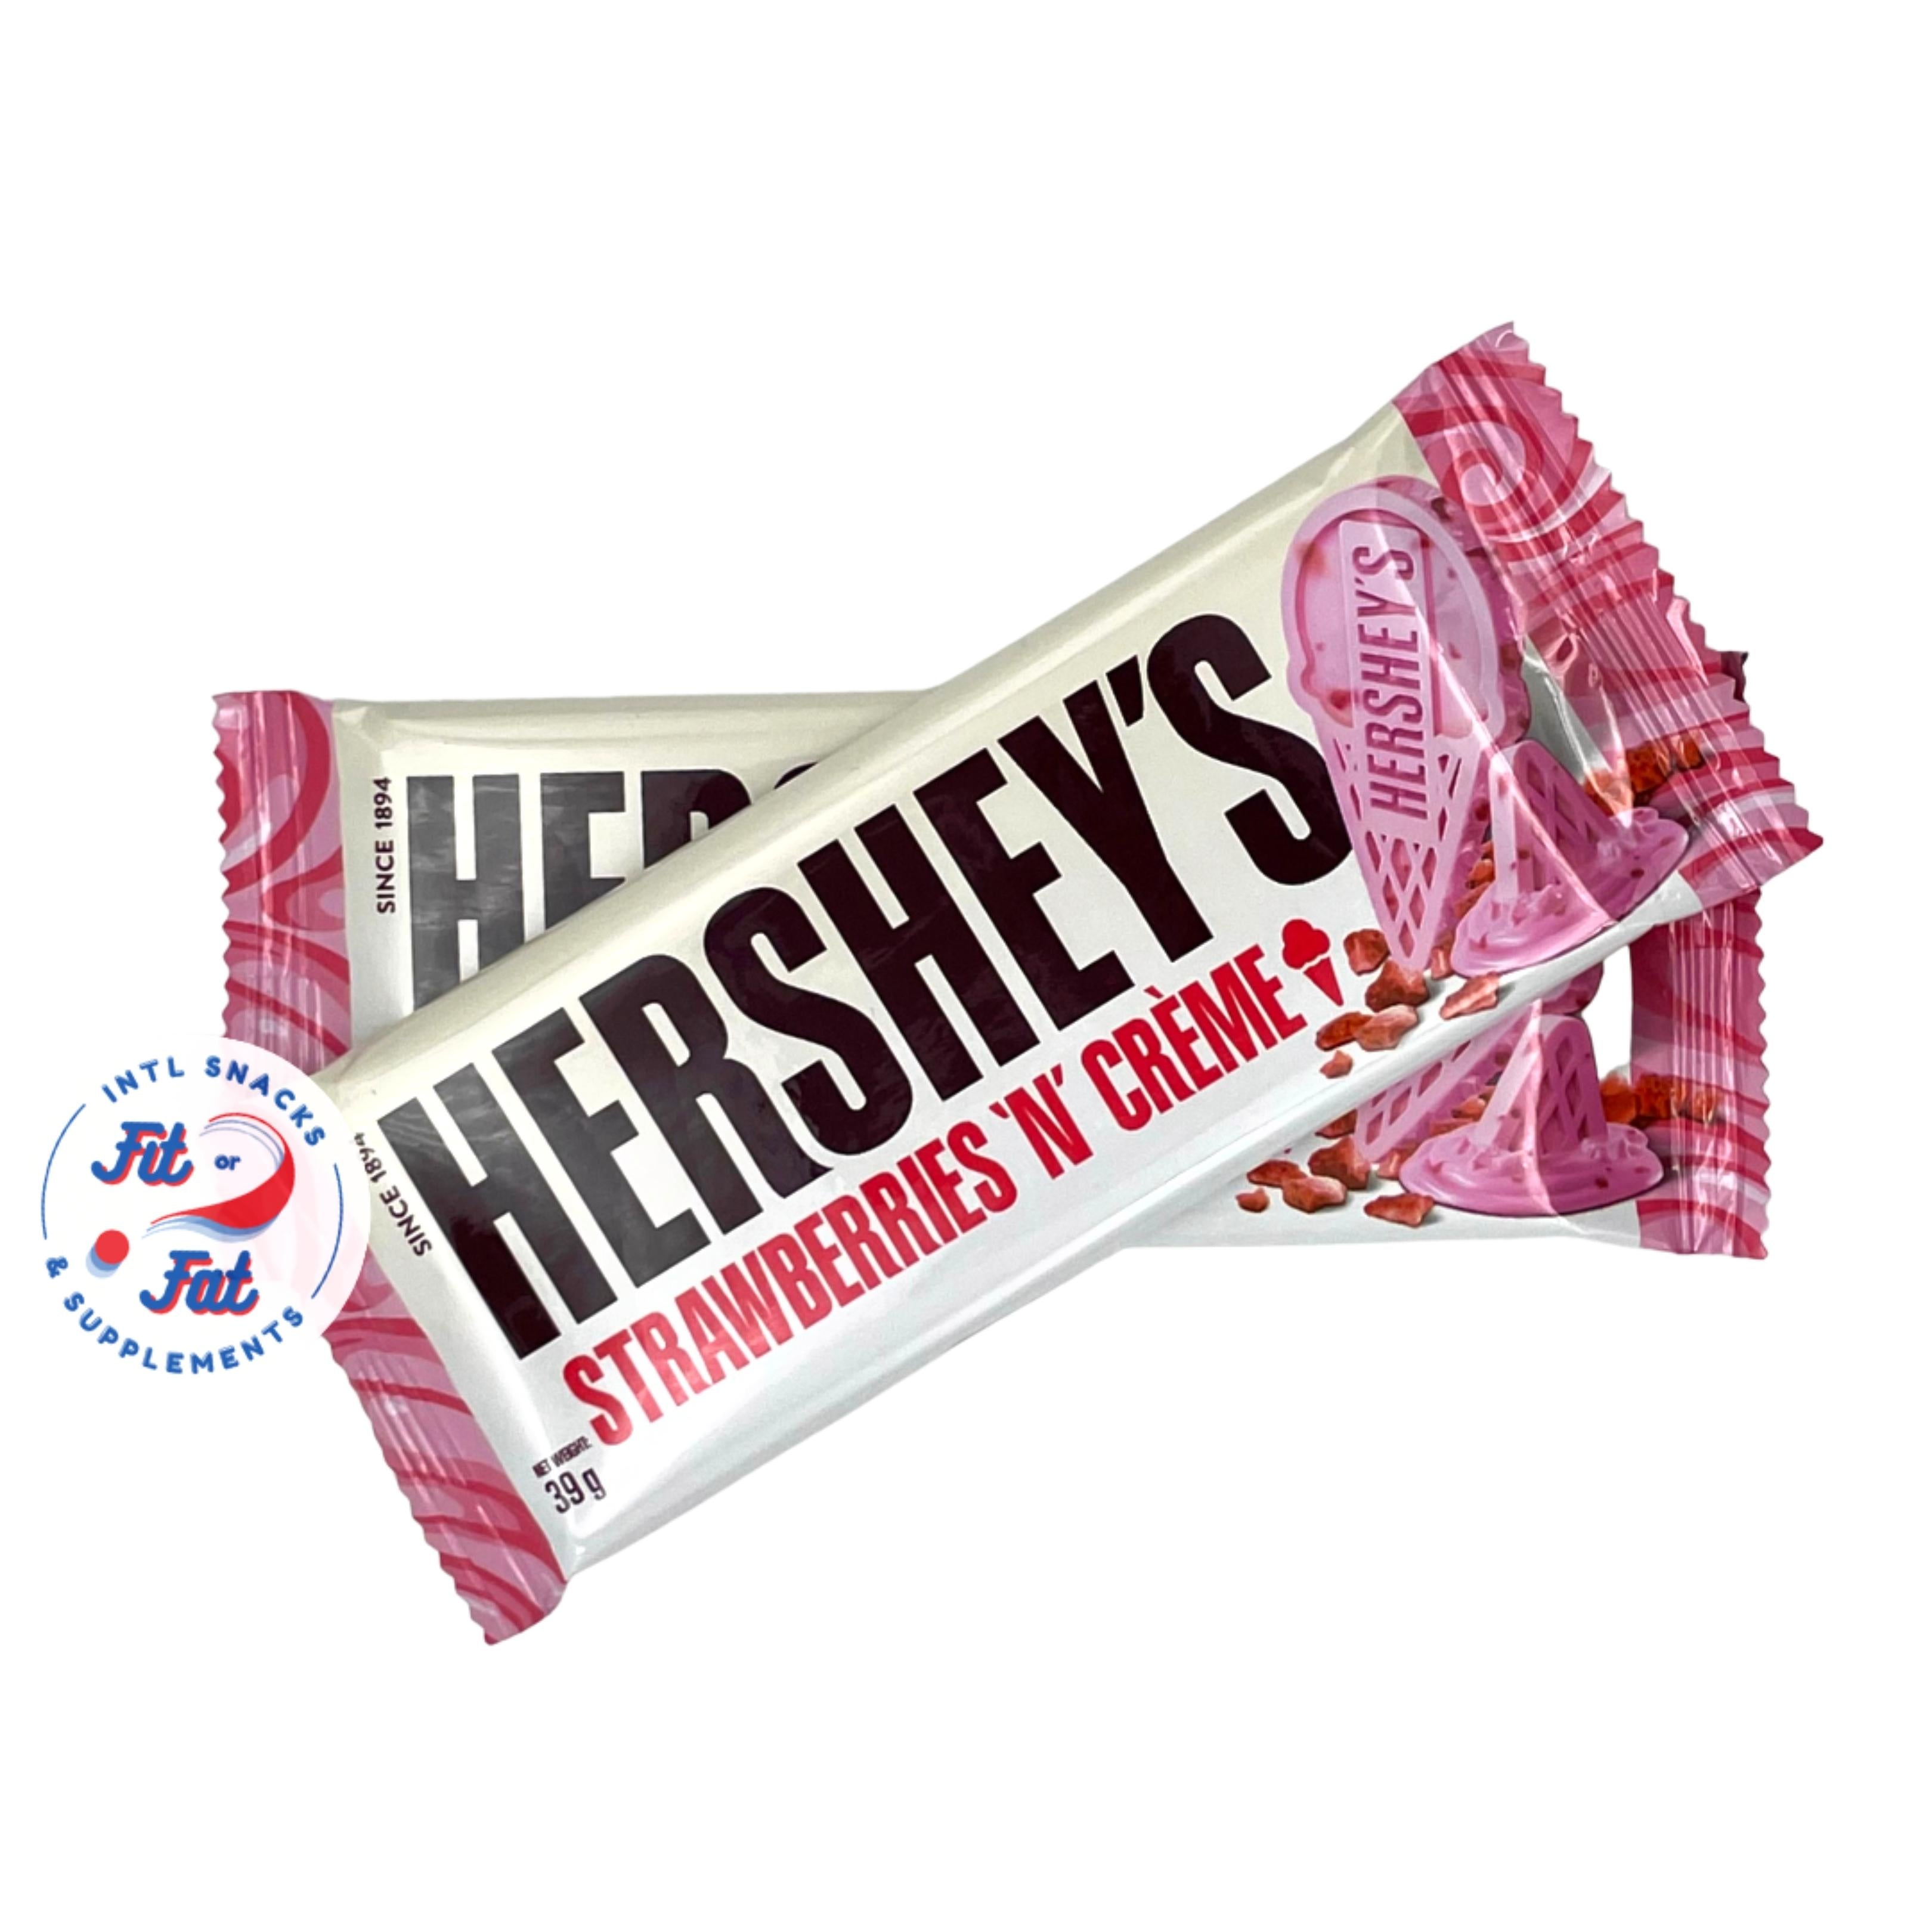 Hershey's Strawberry 'n' Crème Candy Bar 39g